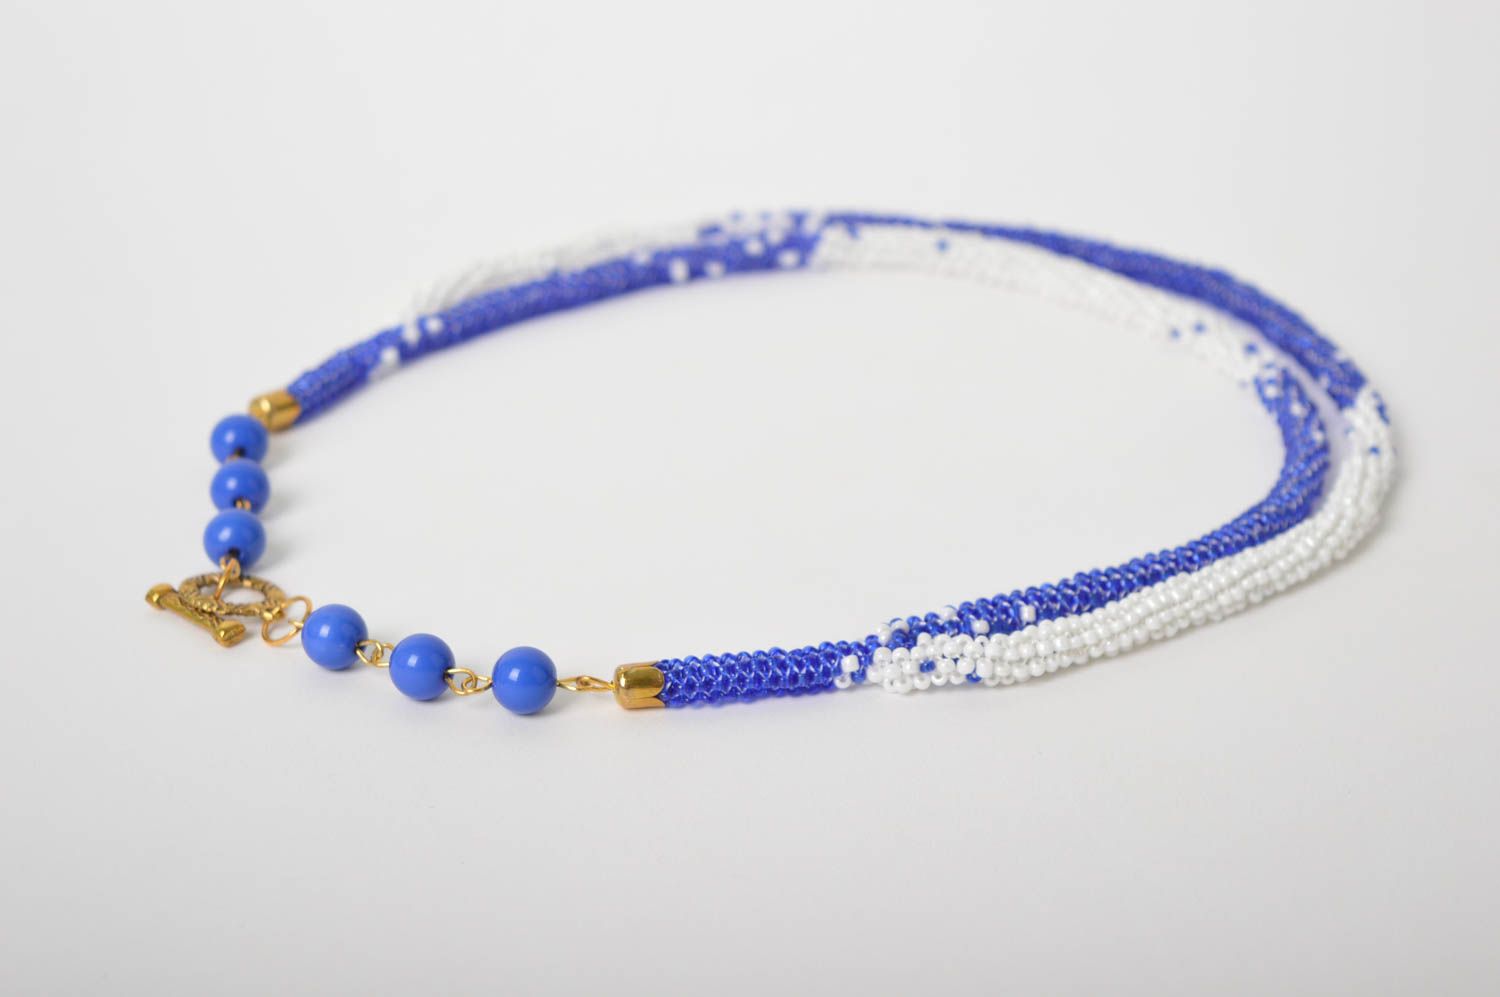 Gentle handmade beaded necklace artisan jewelry designs bead weaving ideas photo 5